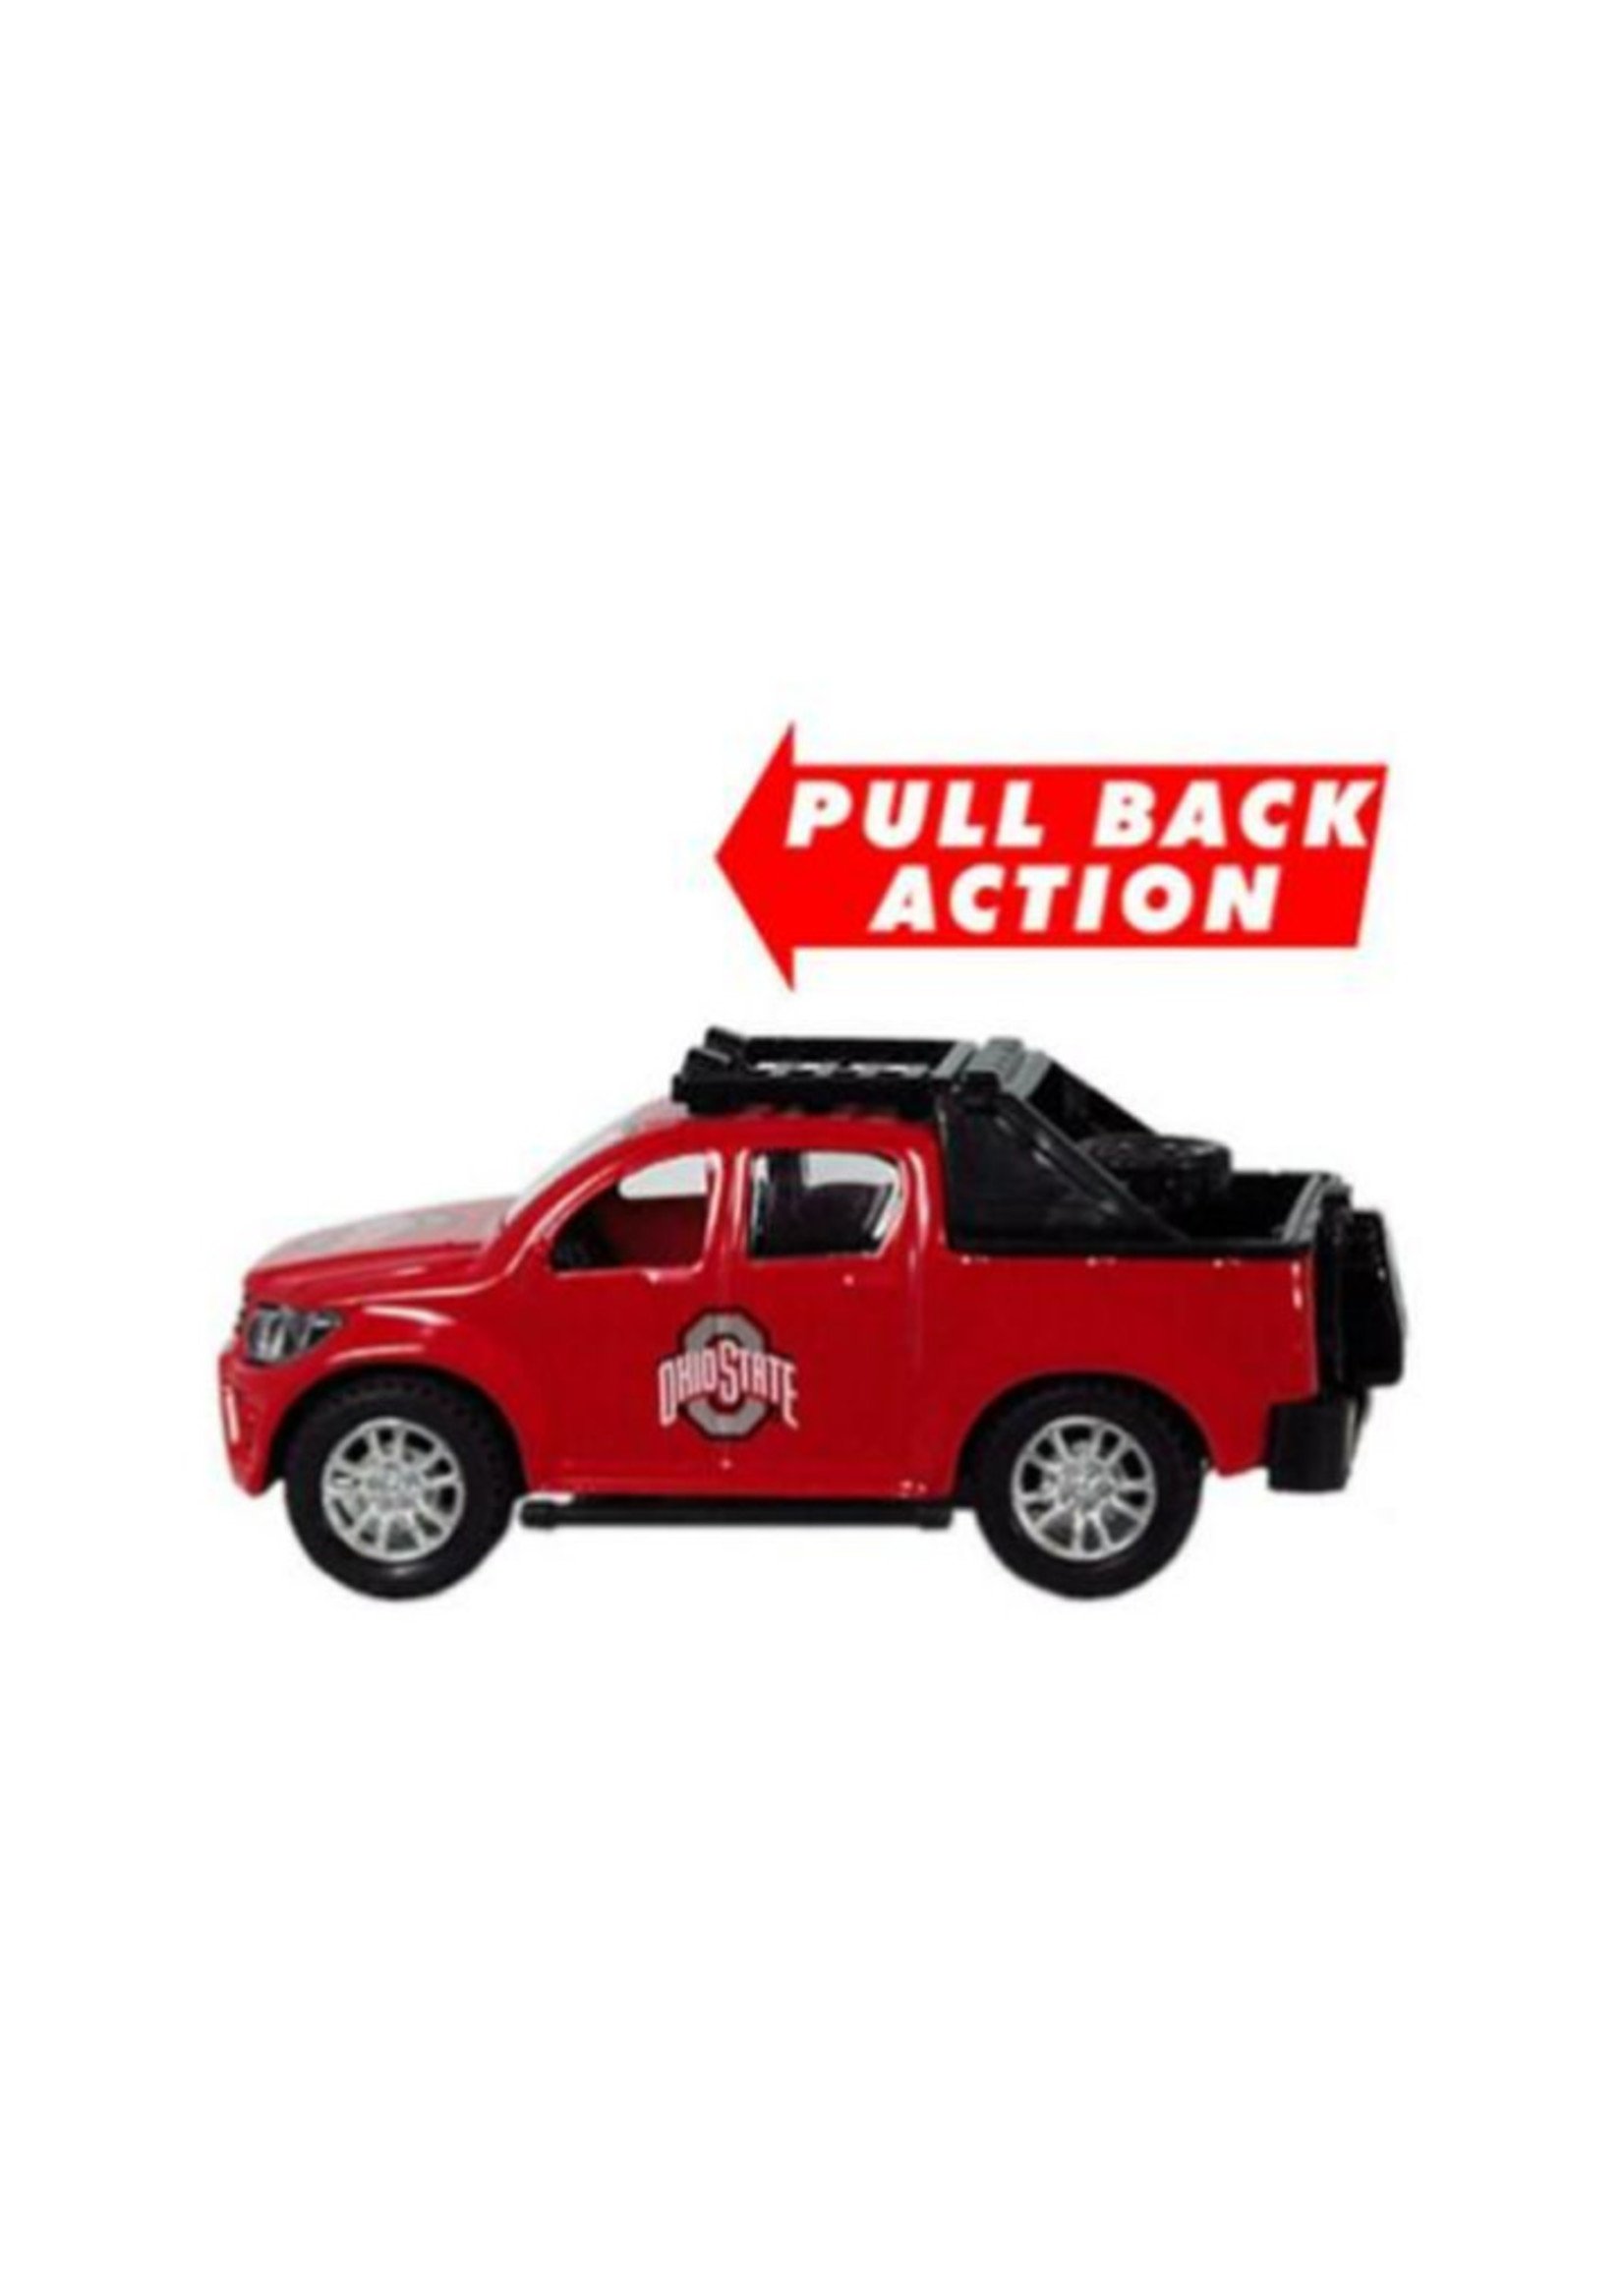 Ohio State Buckeyes Toy Pullback Truck